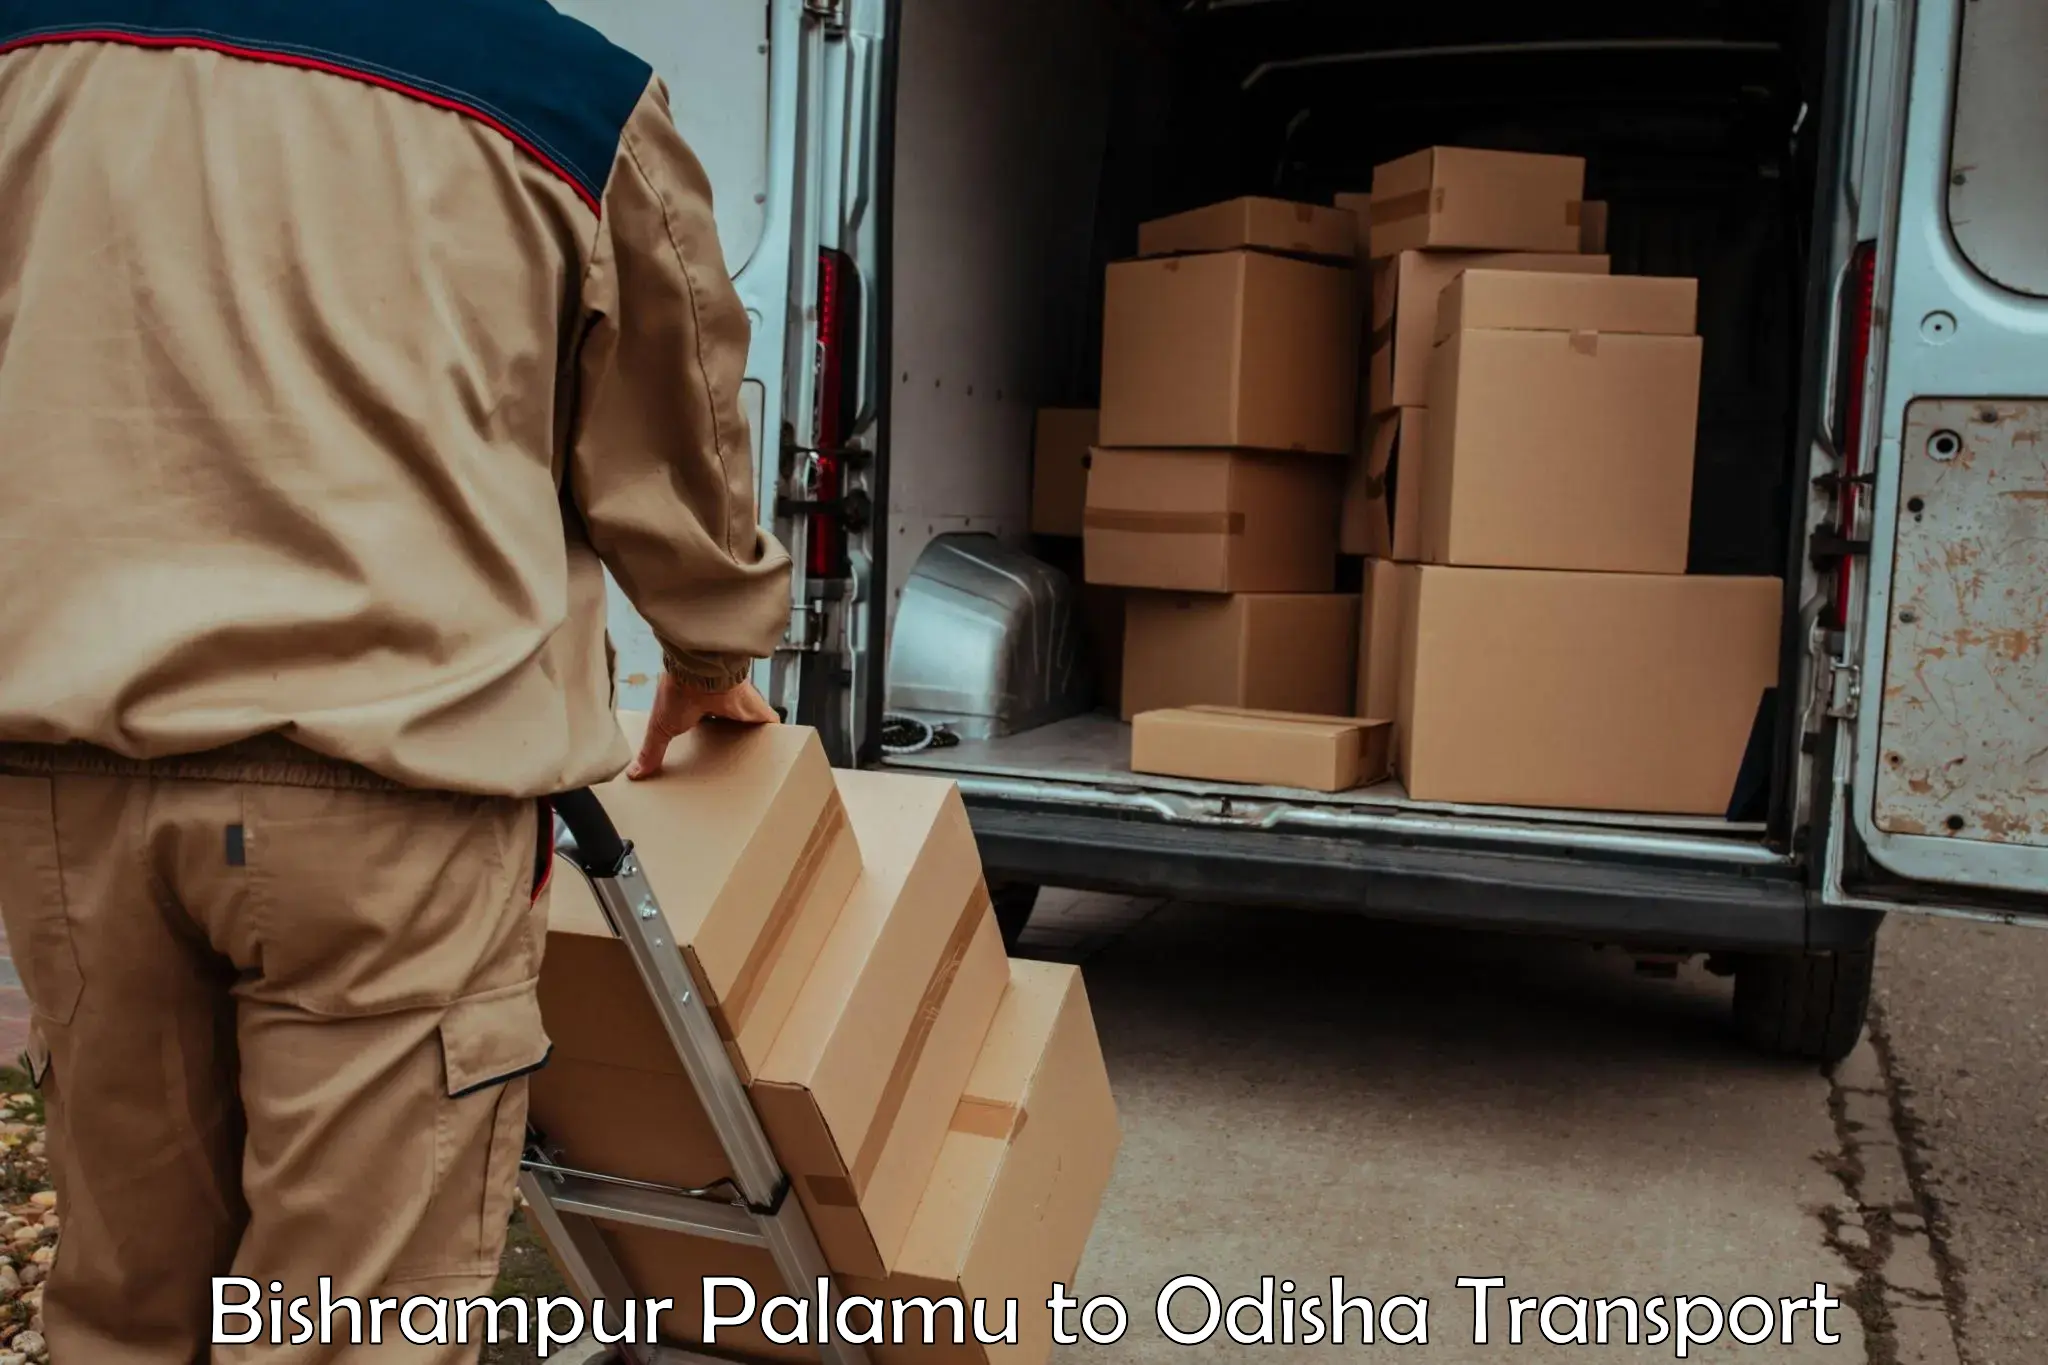 Truck transport companies in India Bishrampur Palamu to Binka